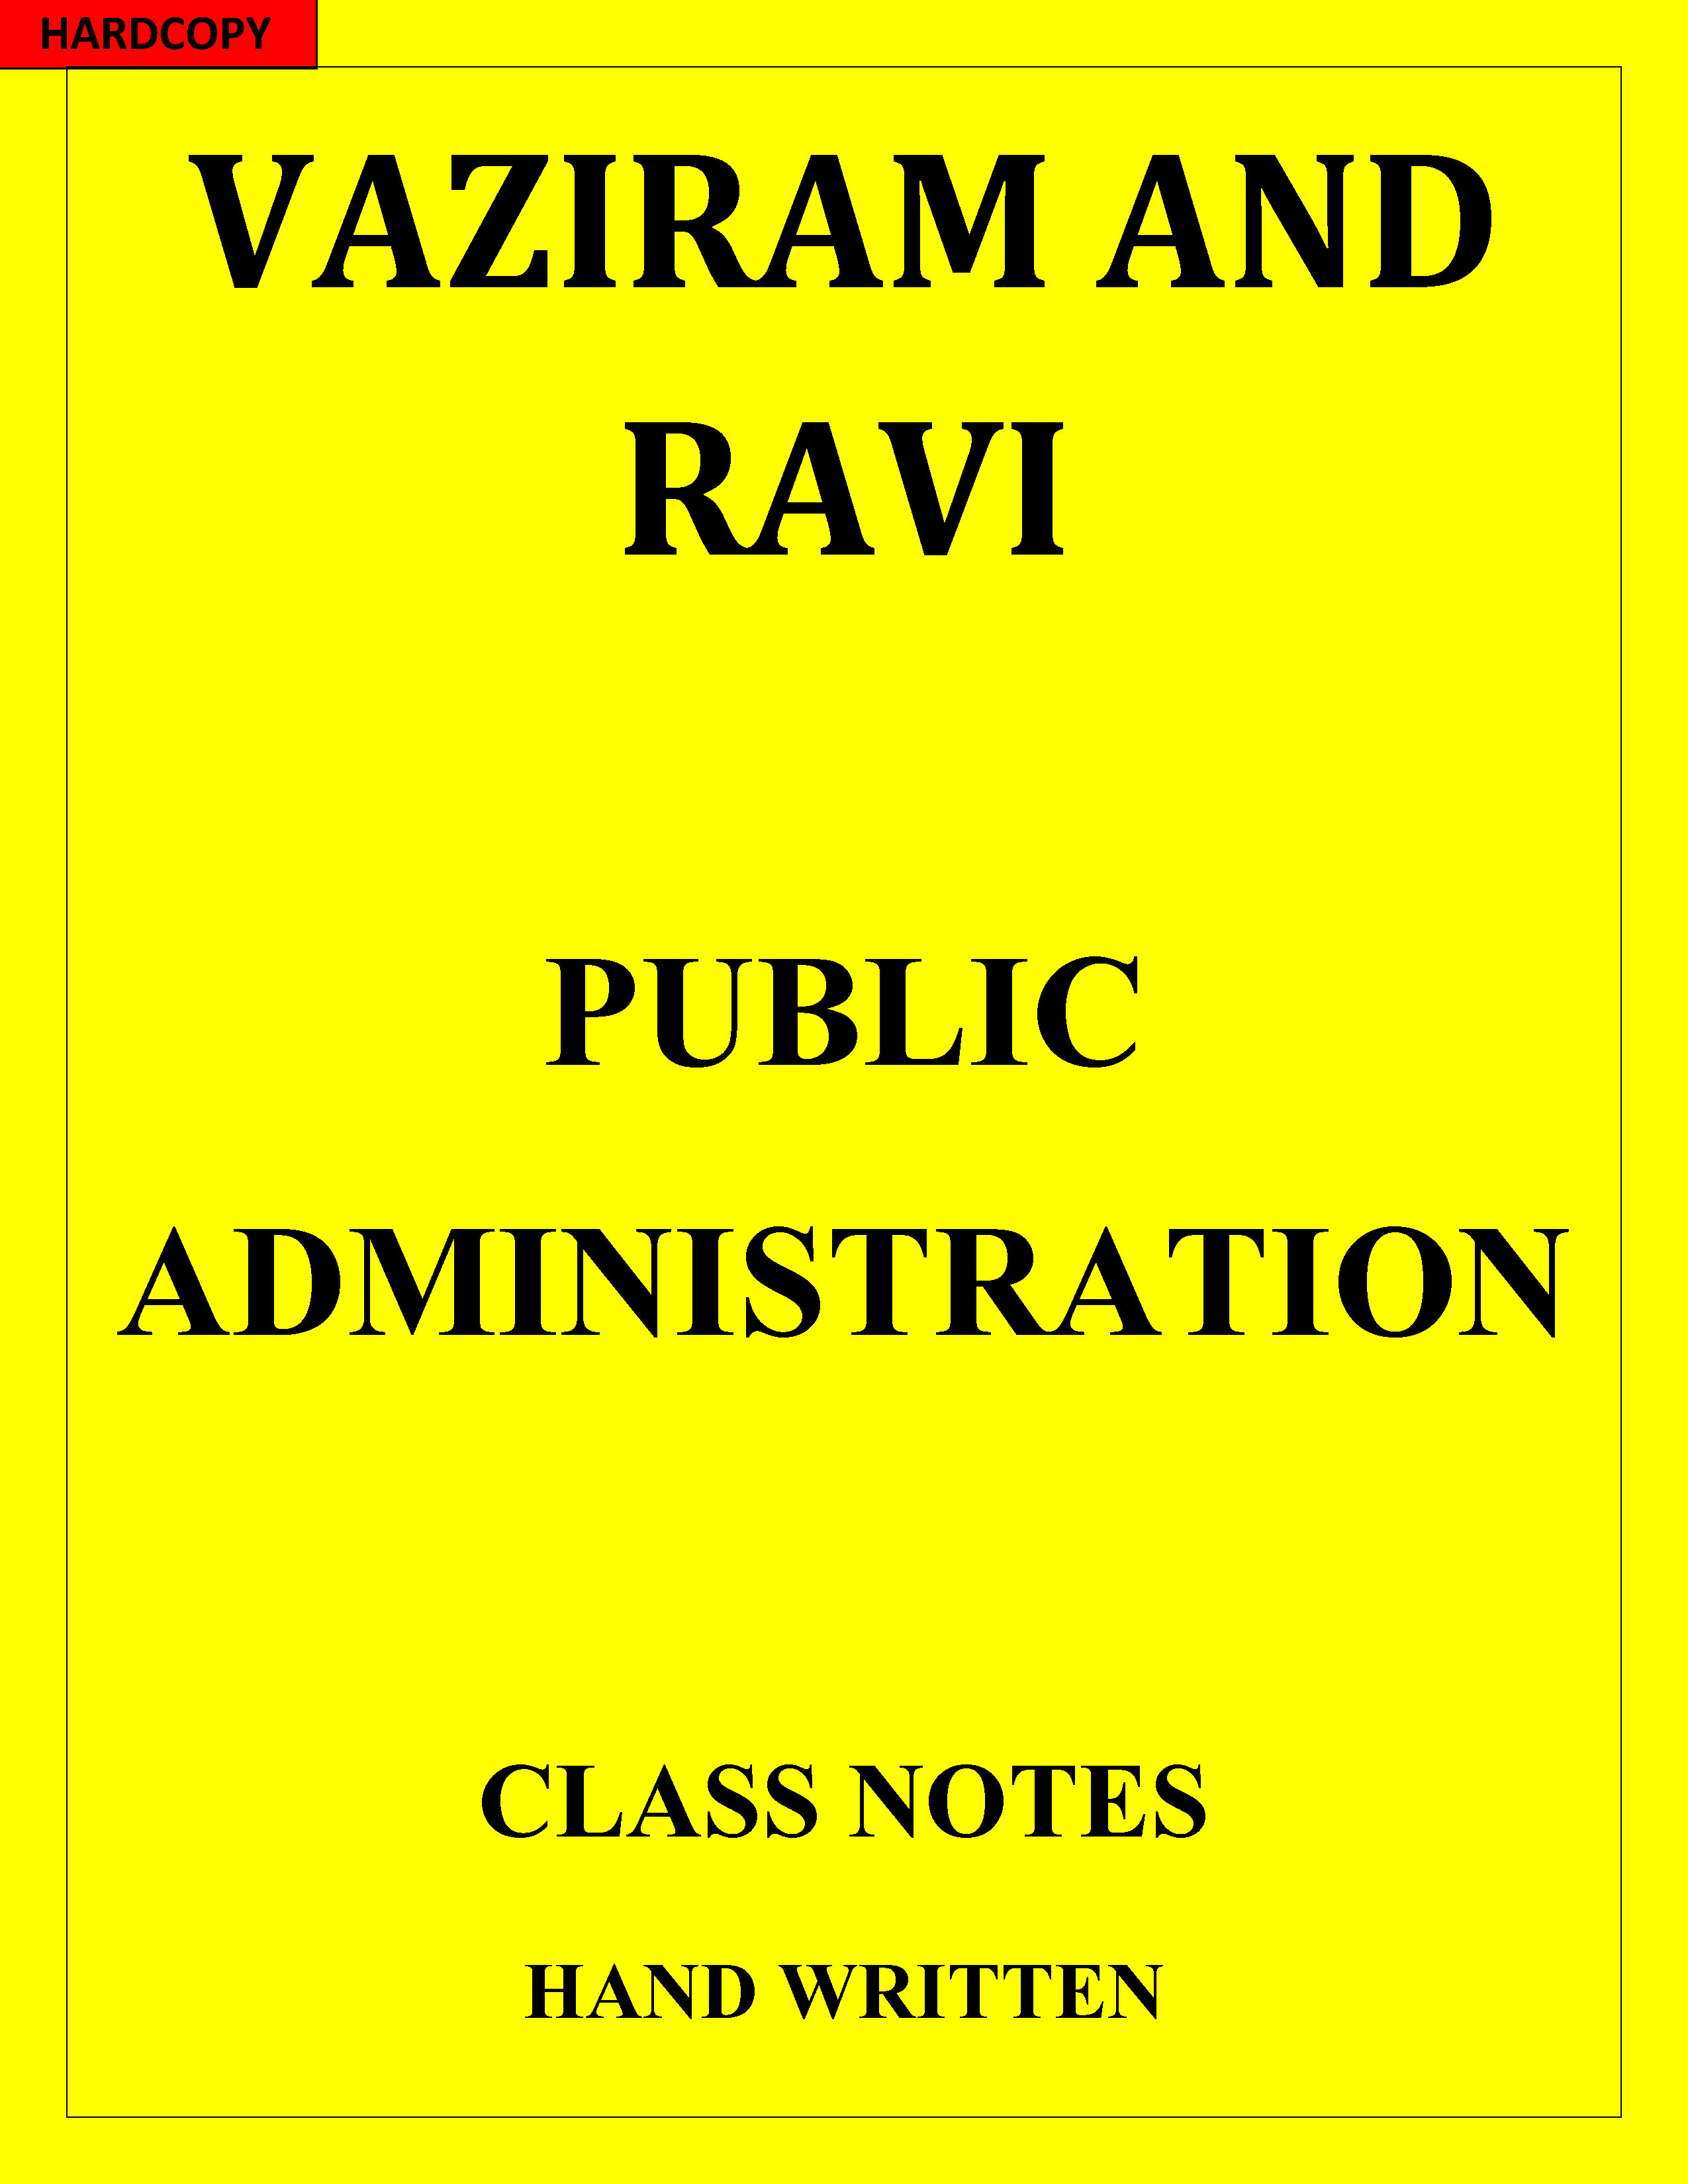 Public Administration VAJIRAM AND RAVI HAND WRITTEN